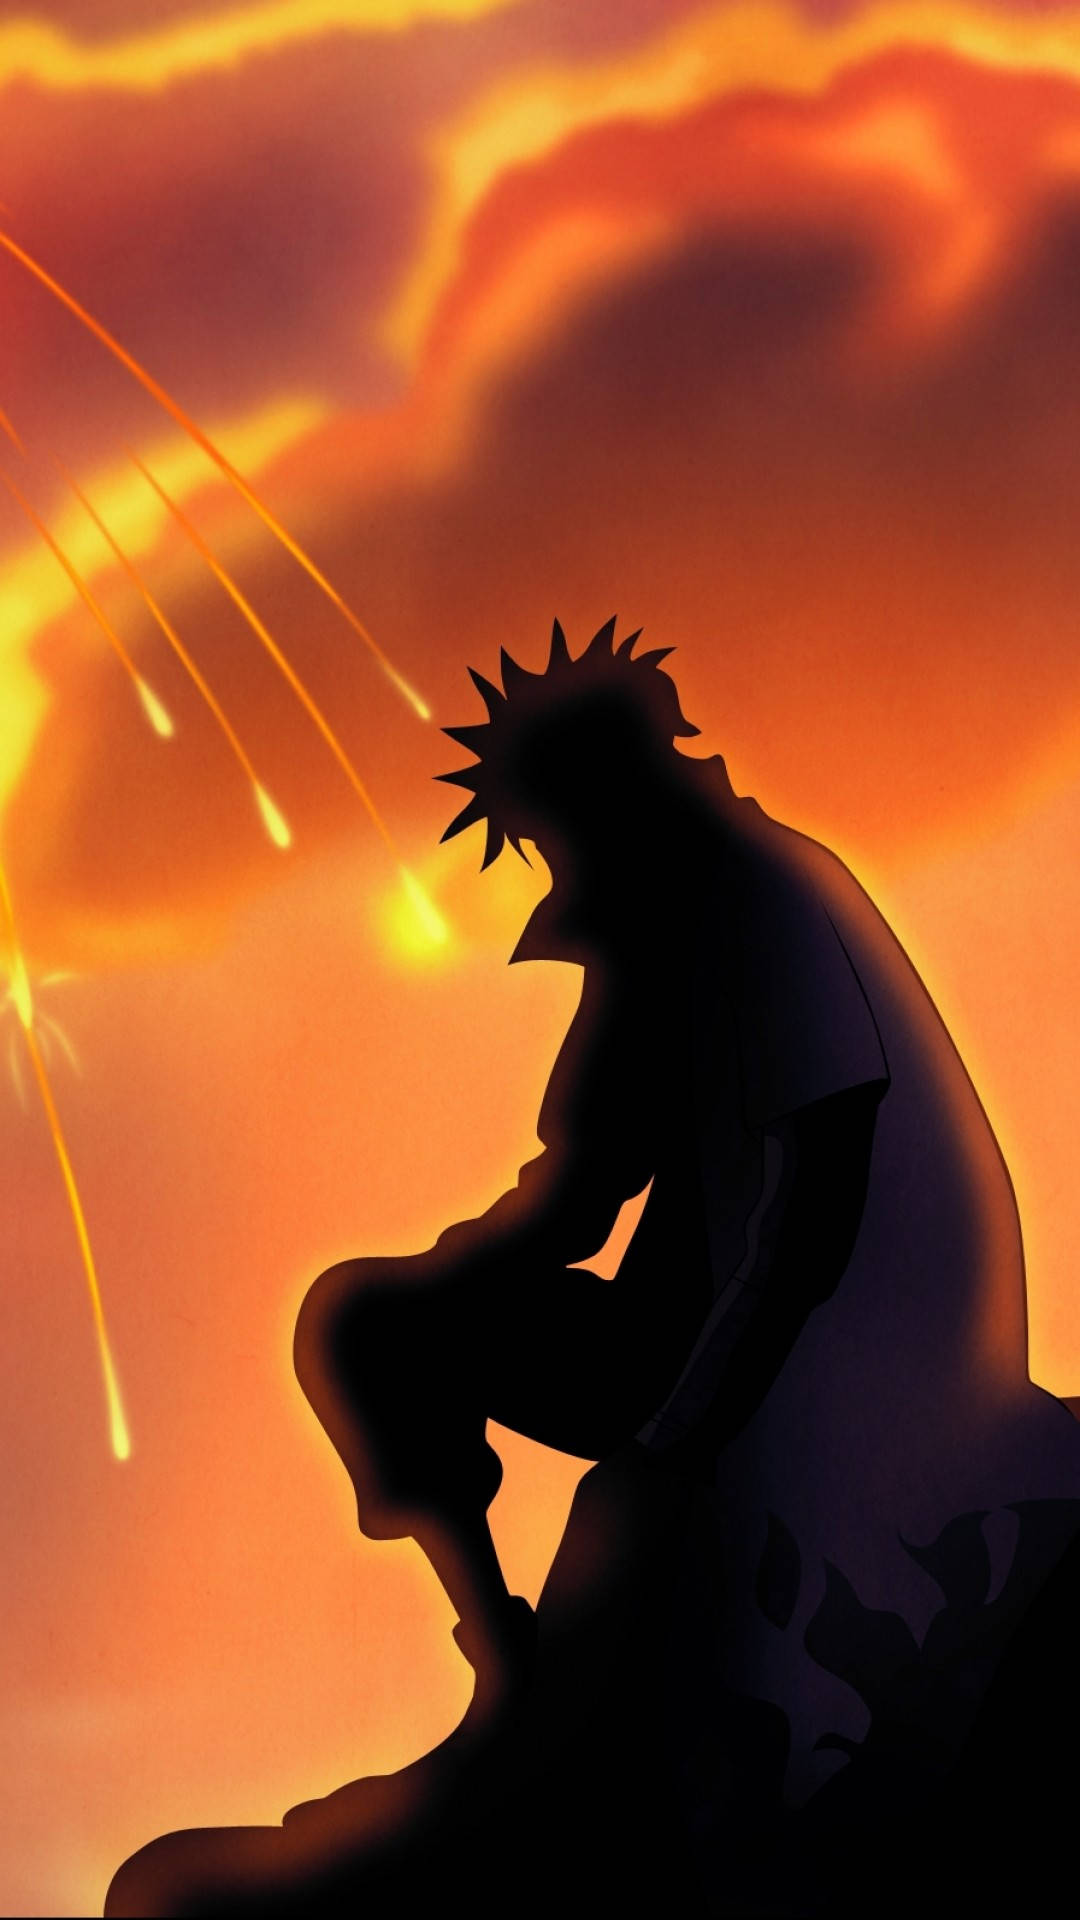 Sitting Naruto Silhouette IPhone Wallpaper